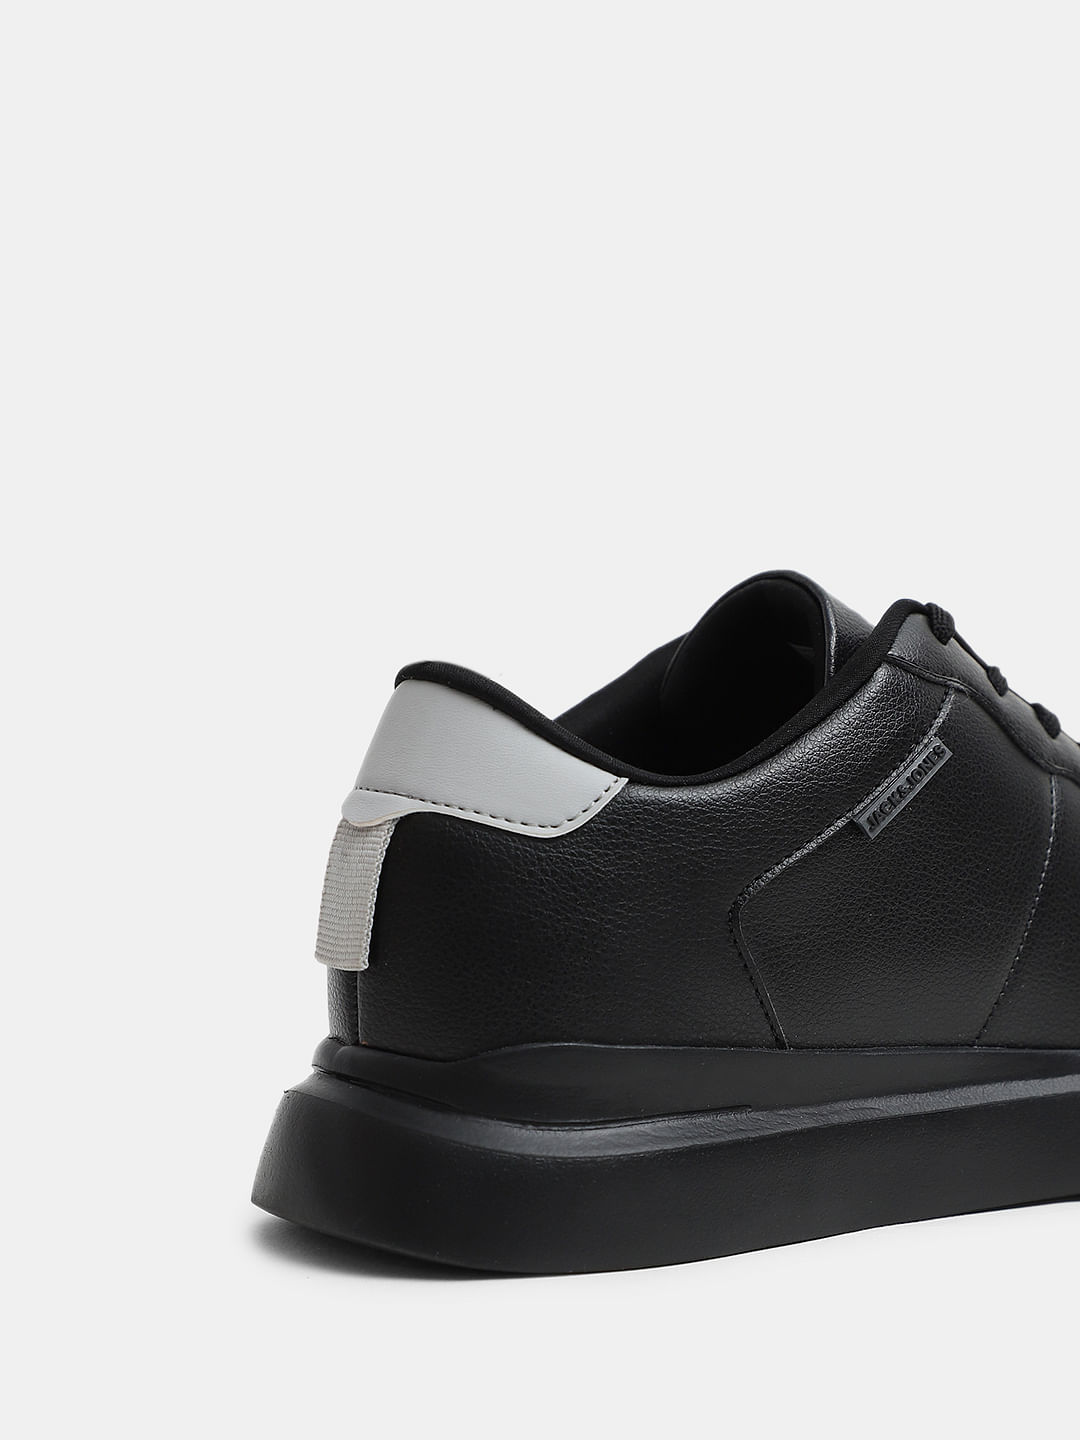 Men's Premium Italian Leather Sneakers. Comfortable & Versatile Shoes -  COMUNITYmade